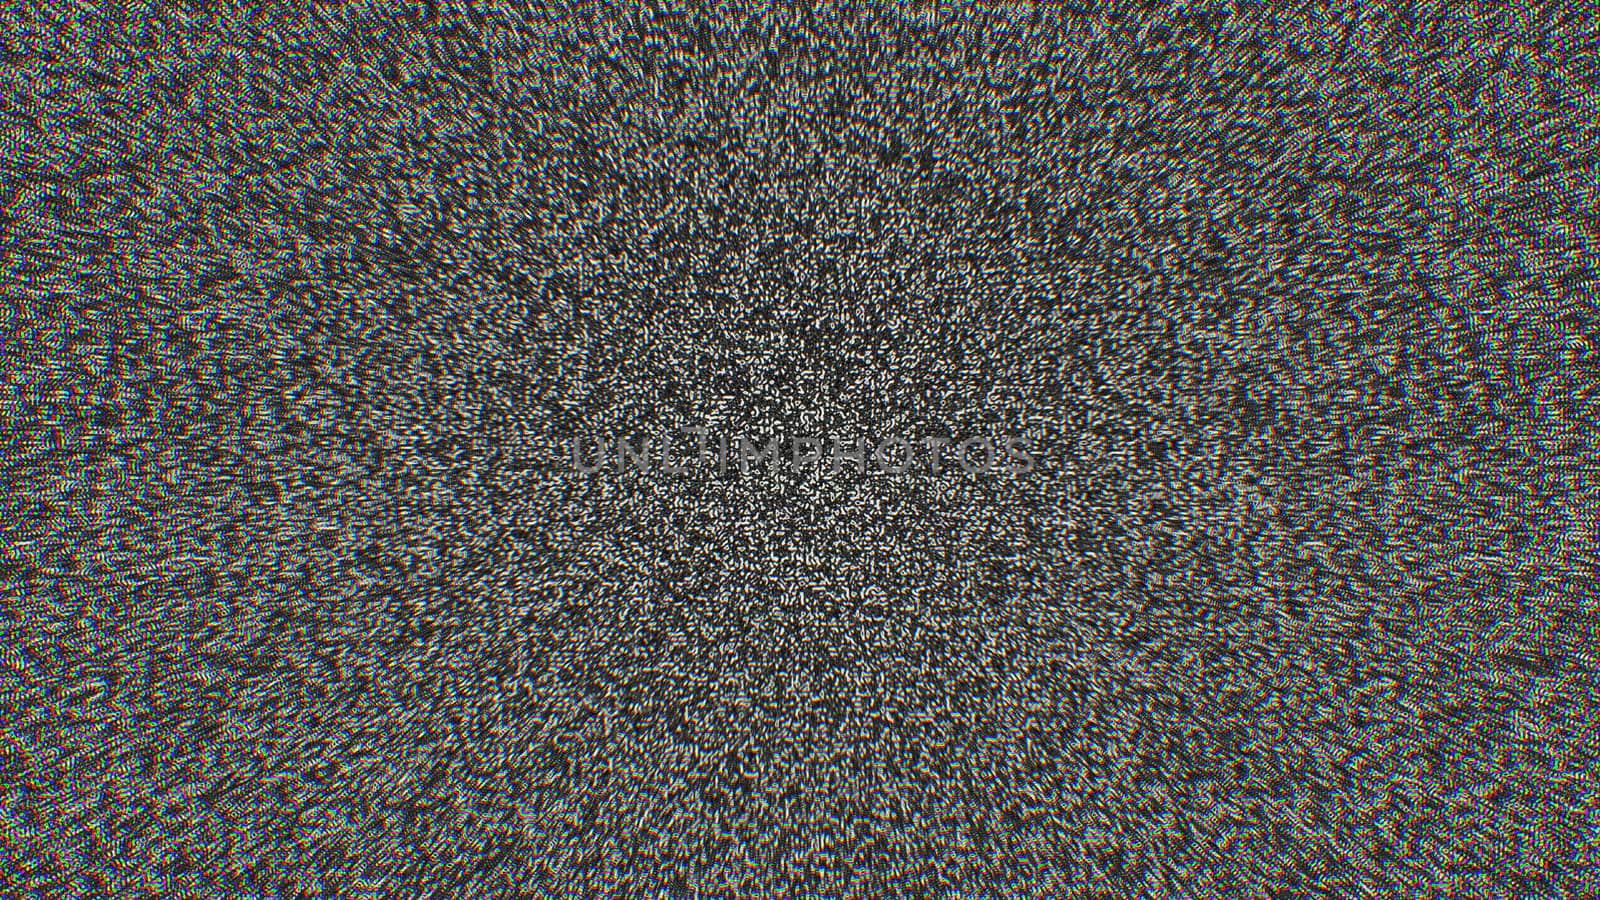 TV white noise background. Digital backdrop. 3d rendered